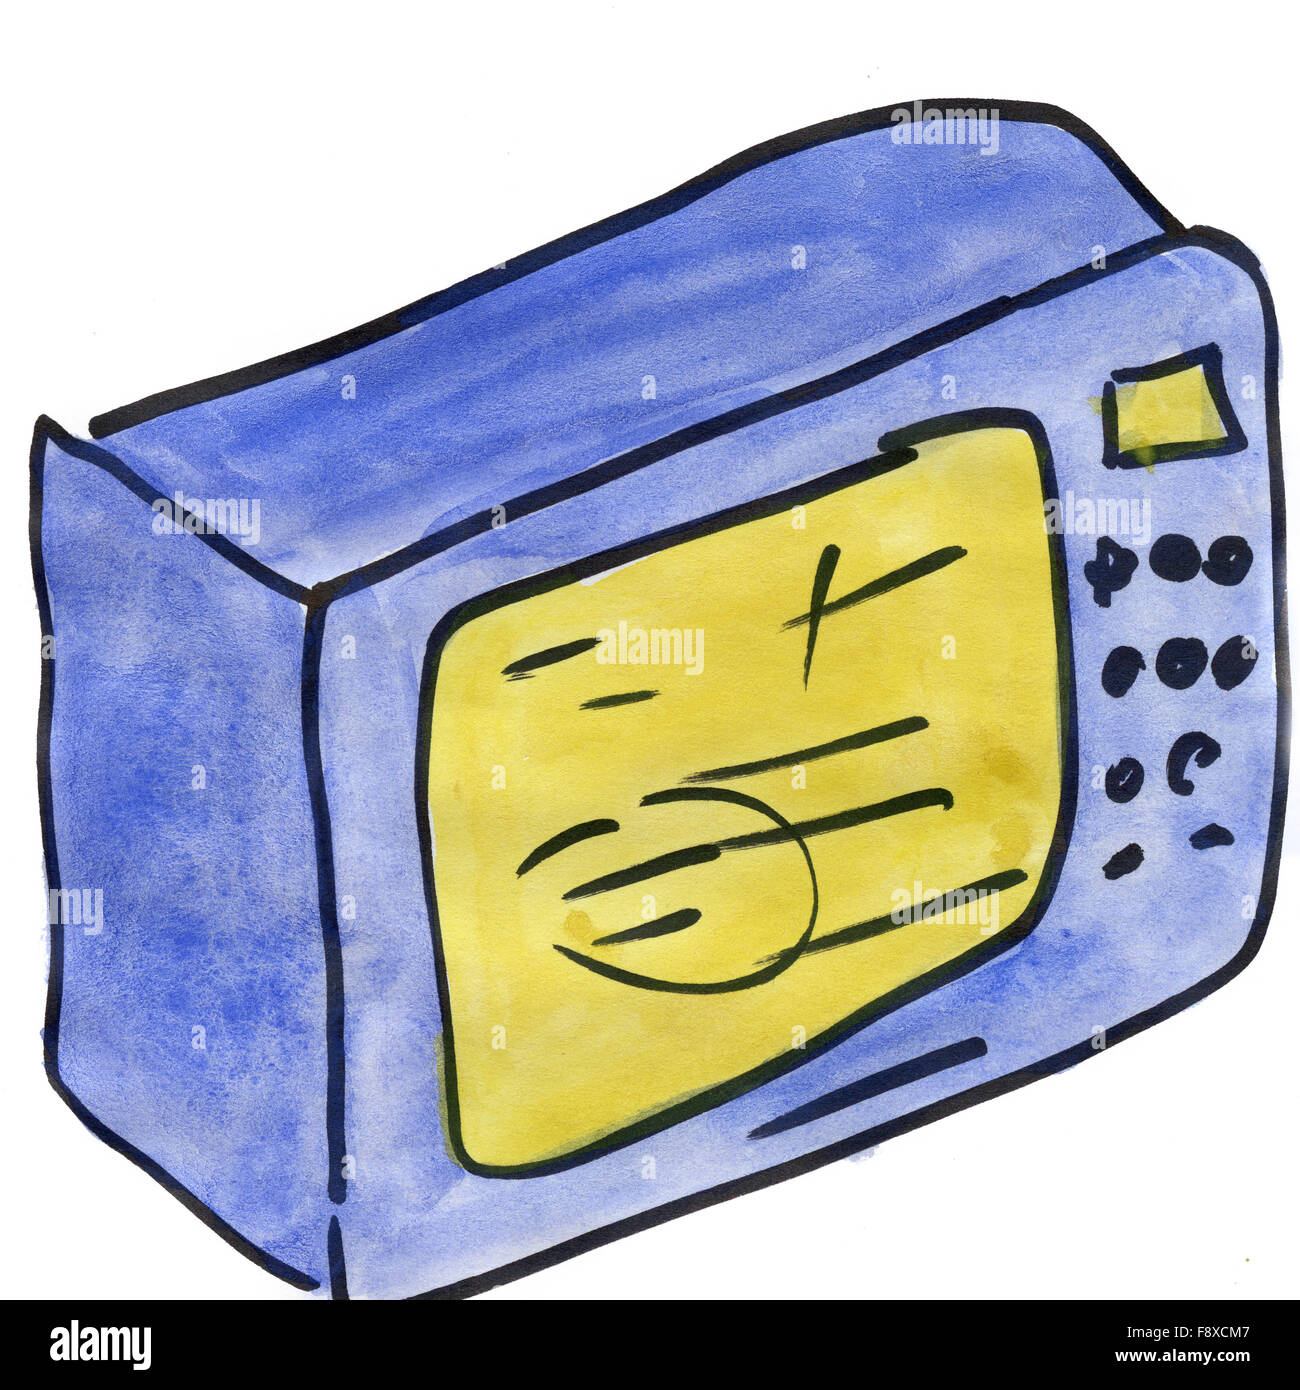 oven microwave kawaii character vector illustration design Stock